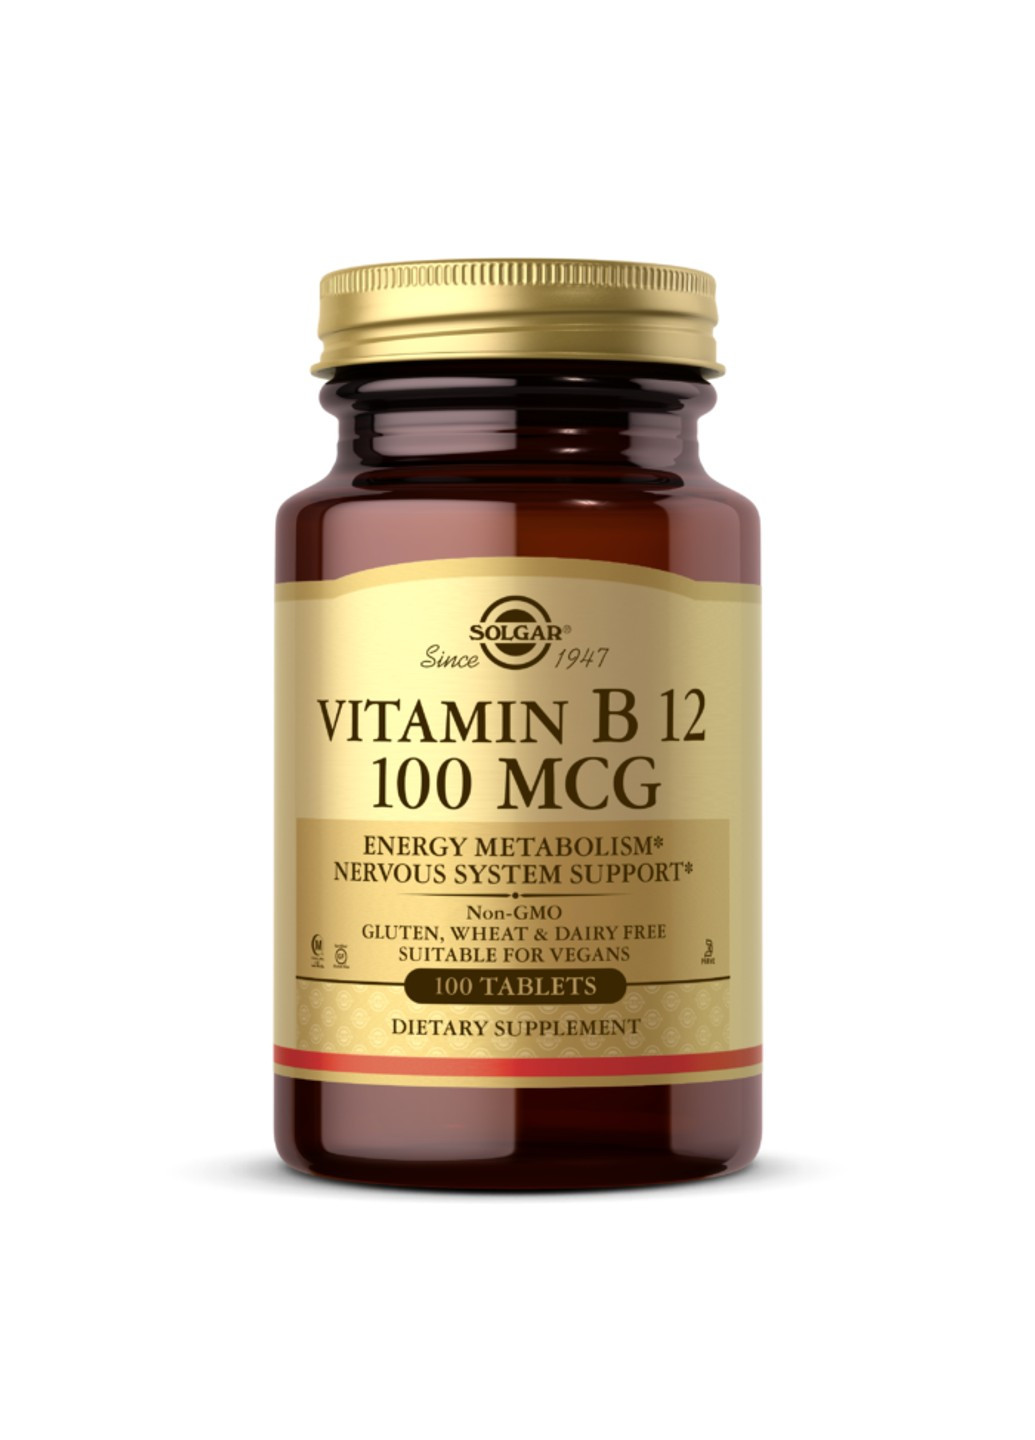 Вітамін Б12 Vitamin B12 100 mcg (100 табл) цианокобаламин солгар Solgar (255407982)